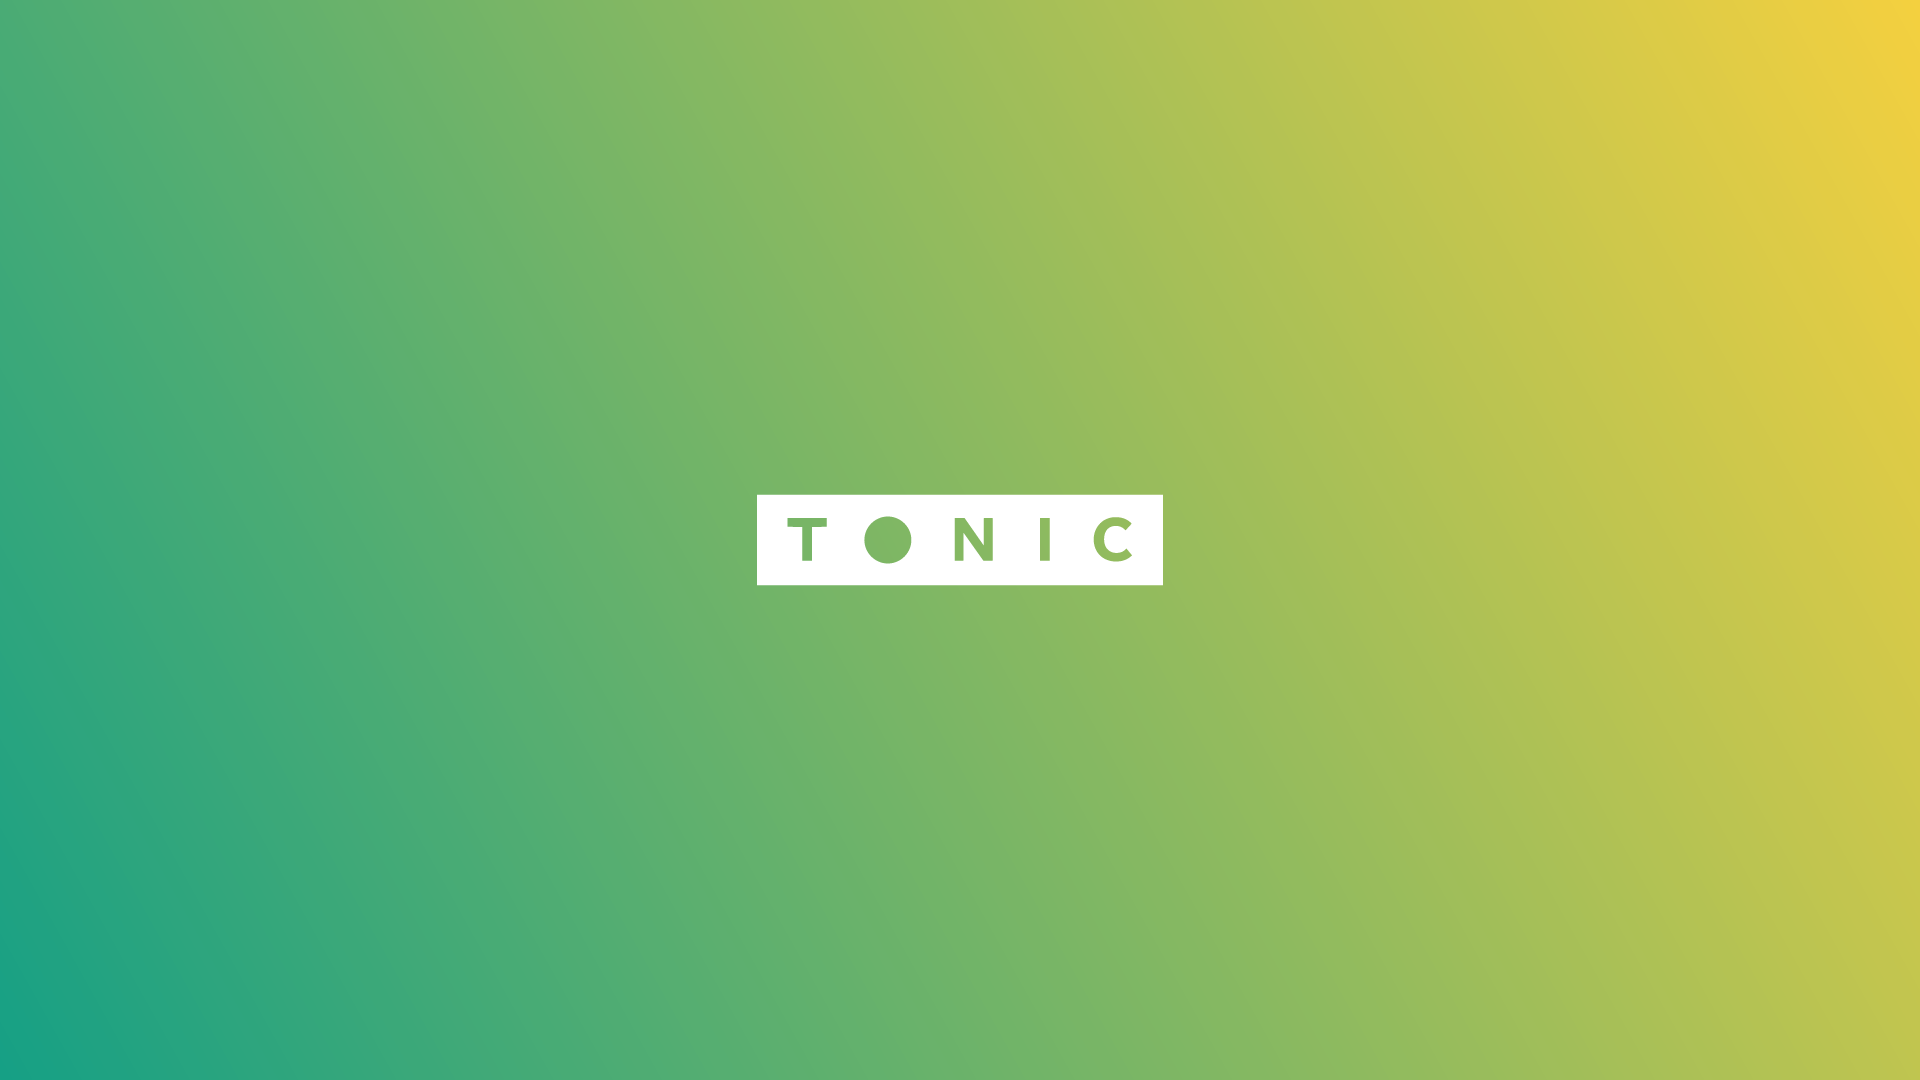 Tonic_Artwork_Main_169